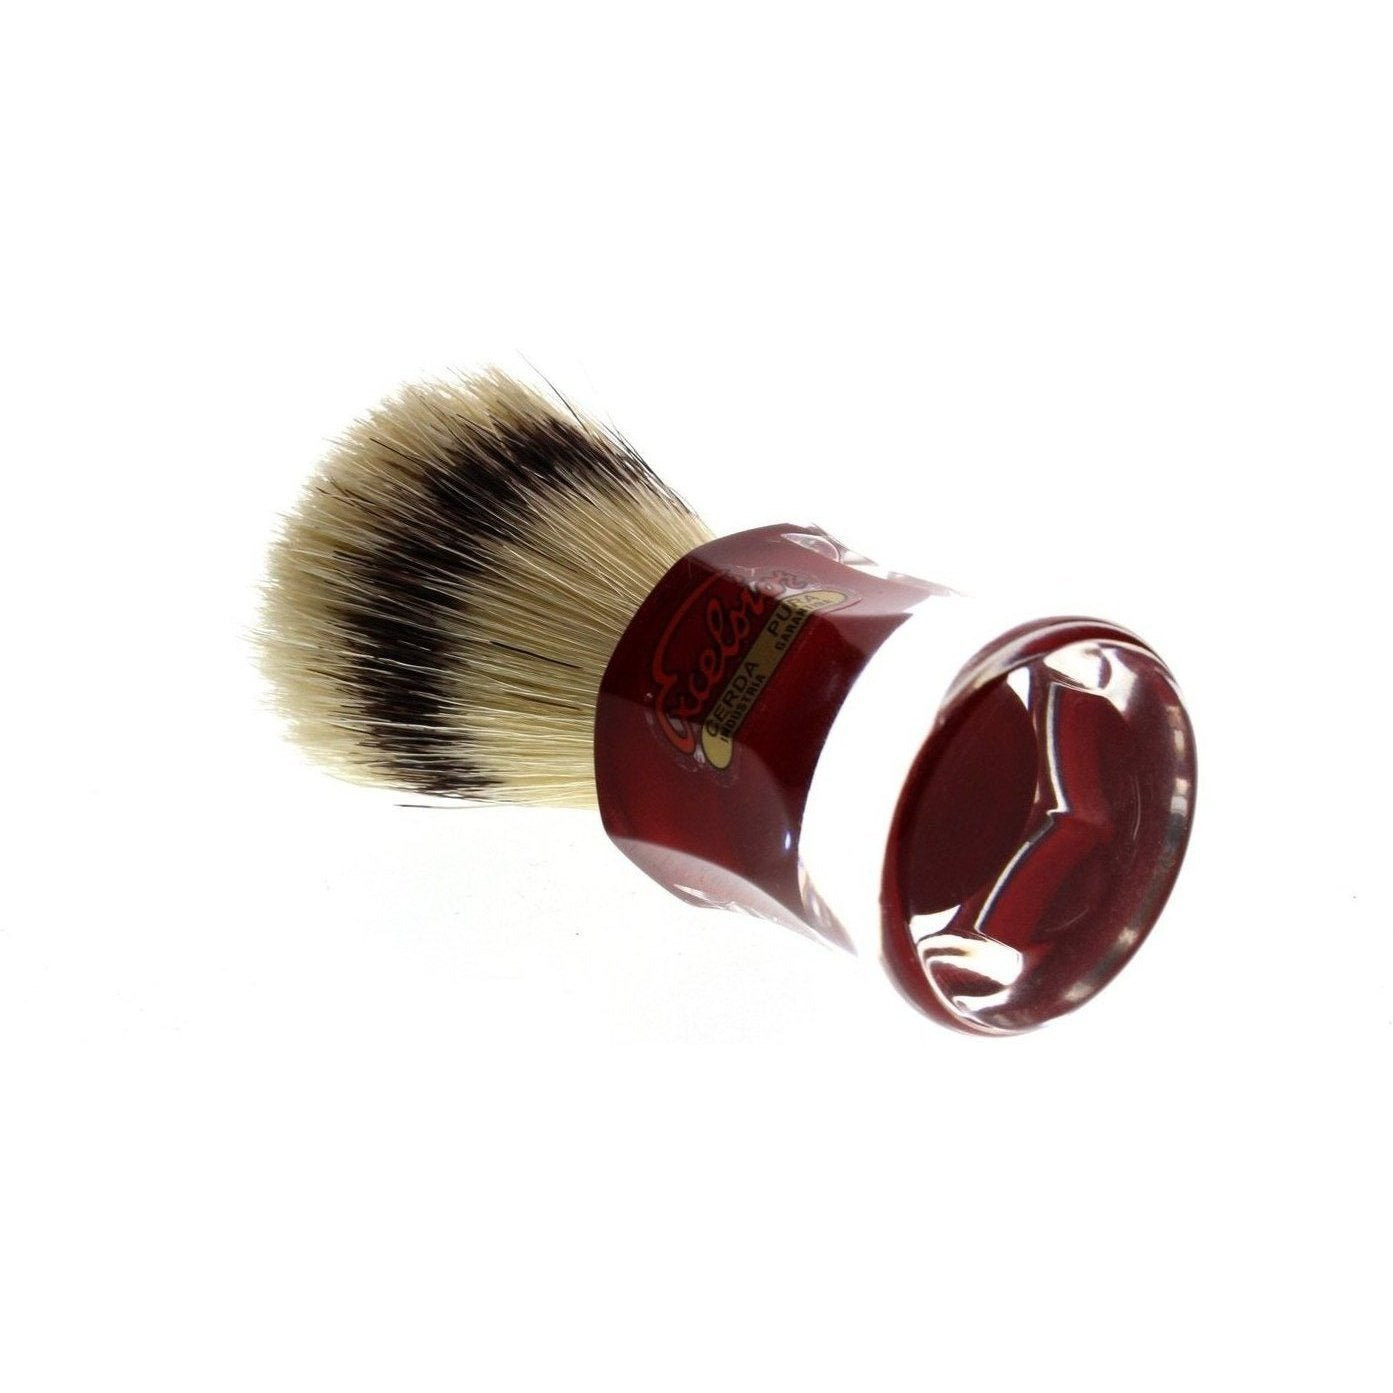 Product image 3 for Semogue 830 Pure Bristle Shaving Brush